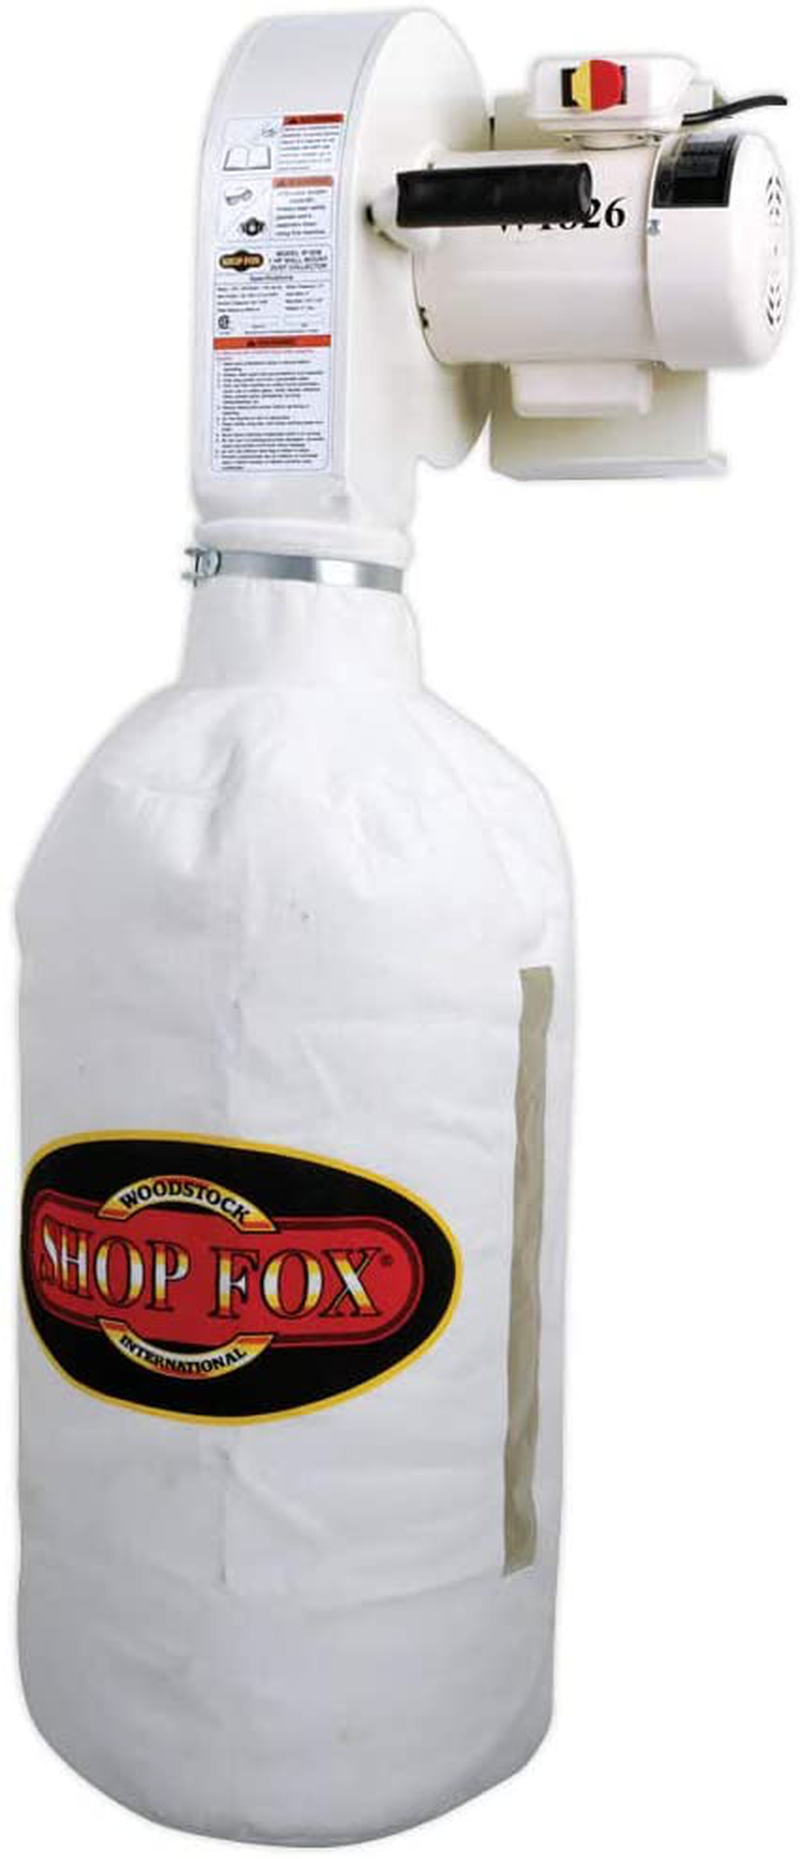 Shop Fox W1826 Wall Dust Collector, 2.5 Micron Filtration  Shop Fox 2.5 Micron Filter Bag  